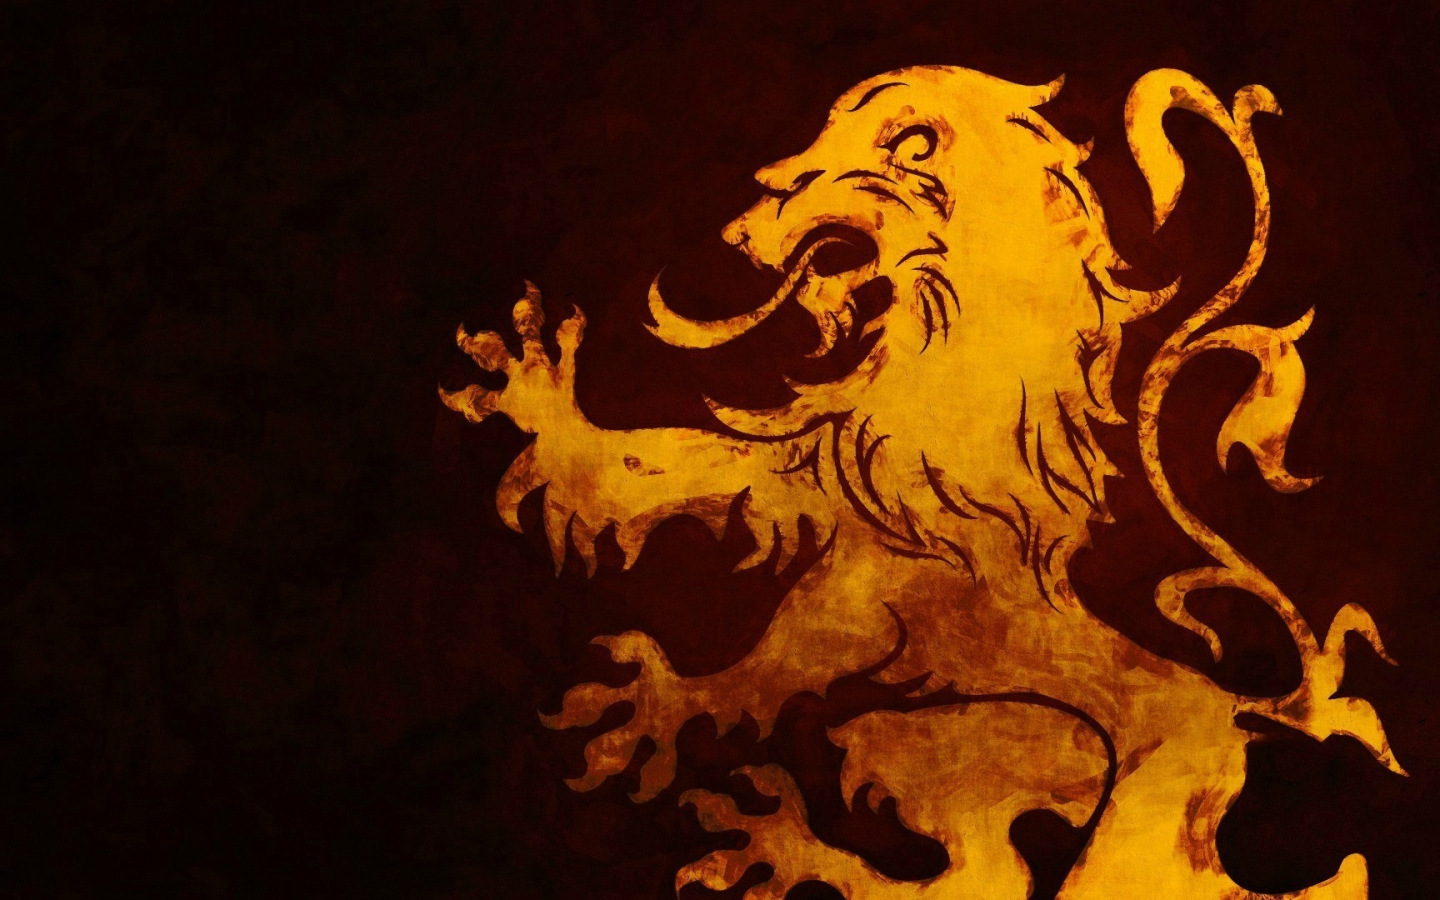 royal, shield, emblem, sign, logo, red, lion, yellow, symbol